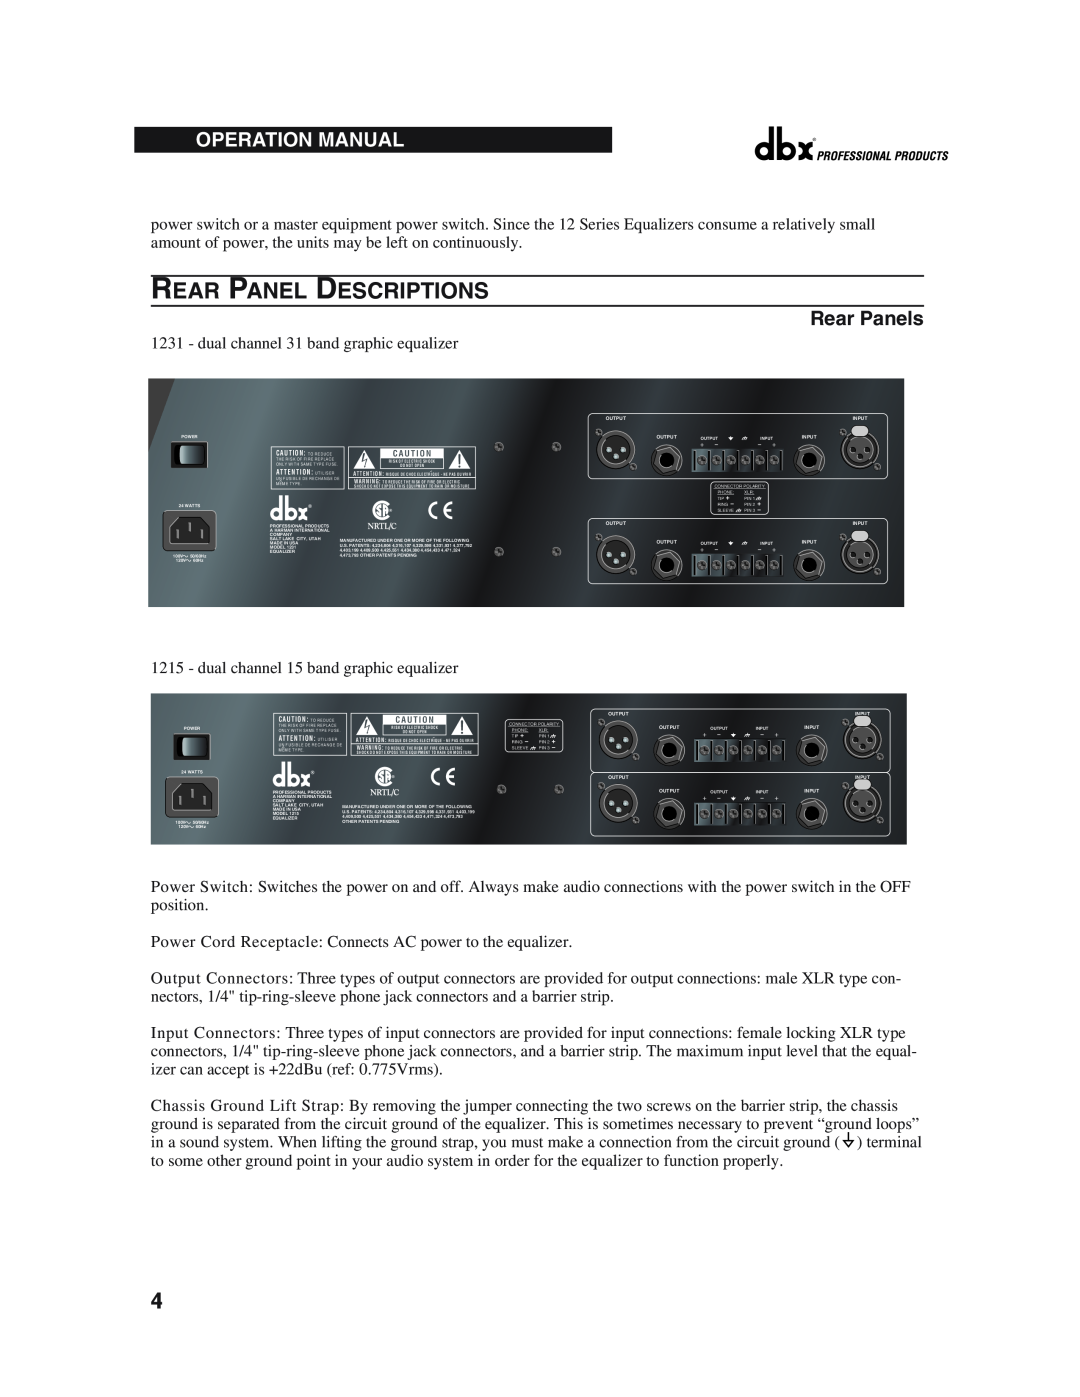 dbx Pro 12 Series operation manual Rear Panel Descriptions, Rear Panels 